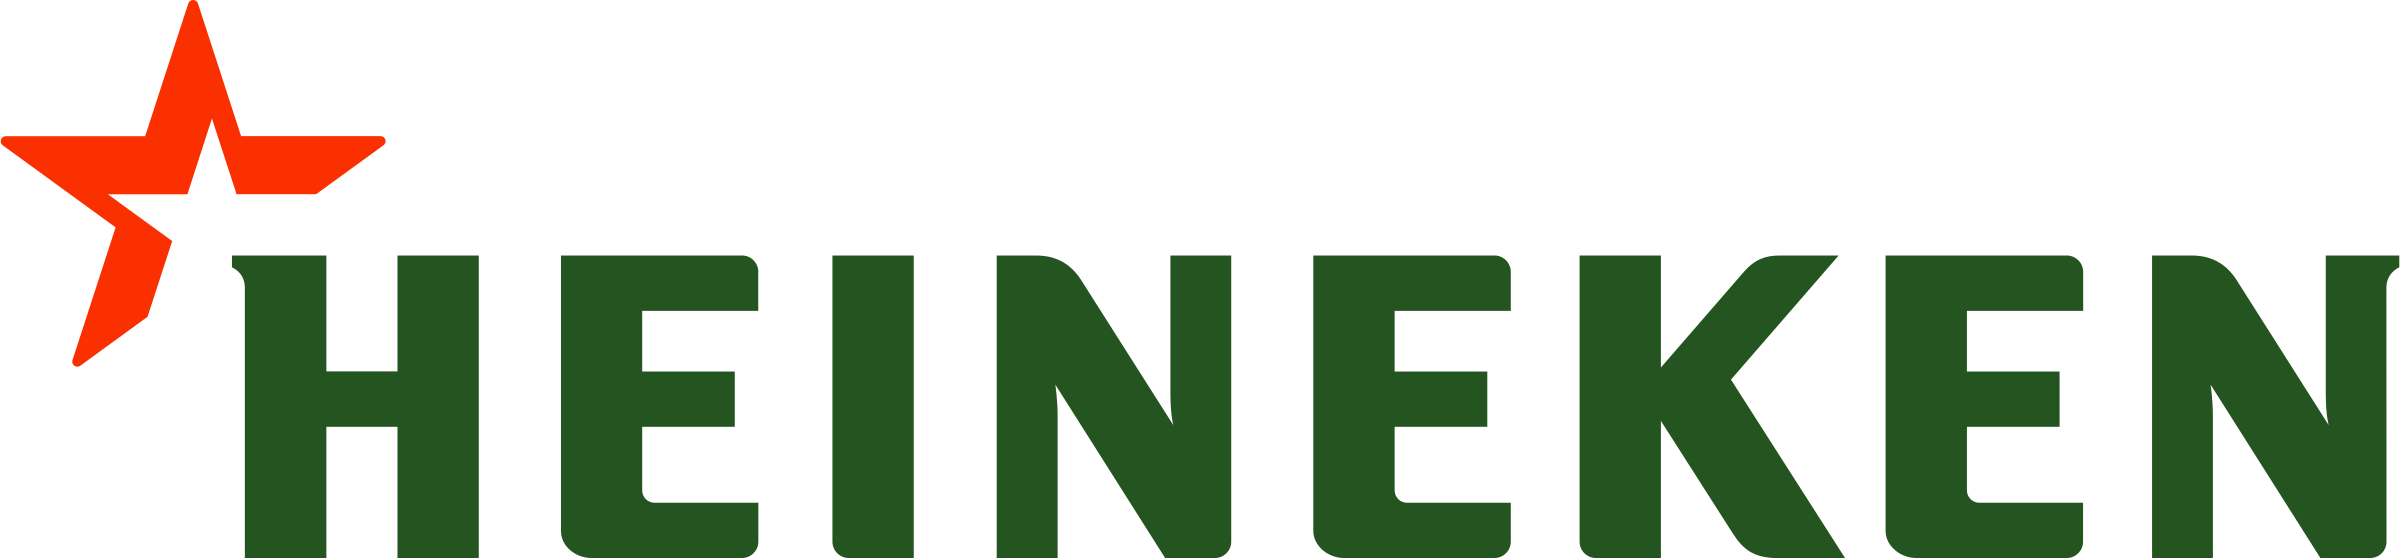 Heineken International Logo - Heineken Logo 2018 Png (1024x245), Png Download